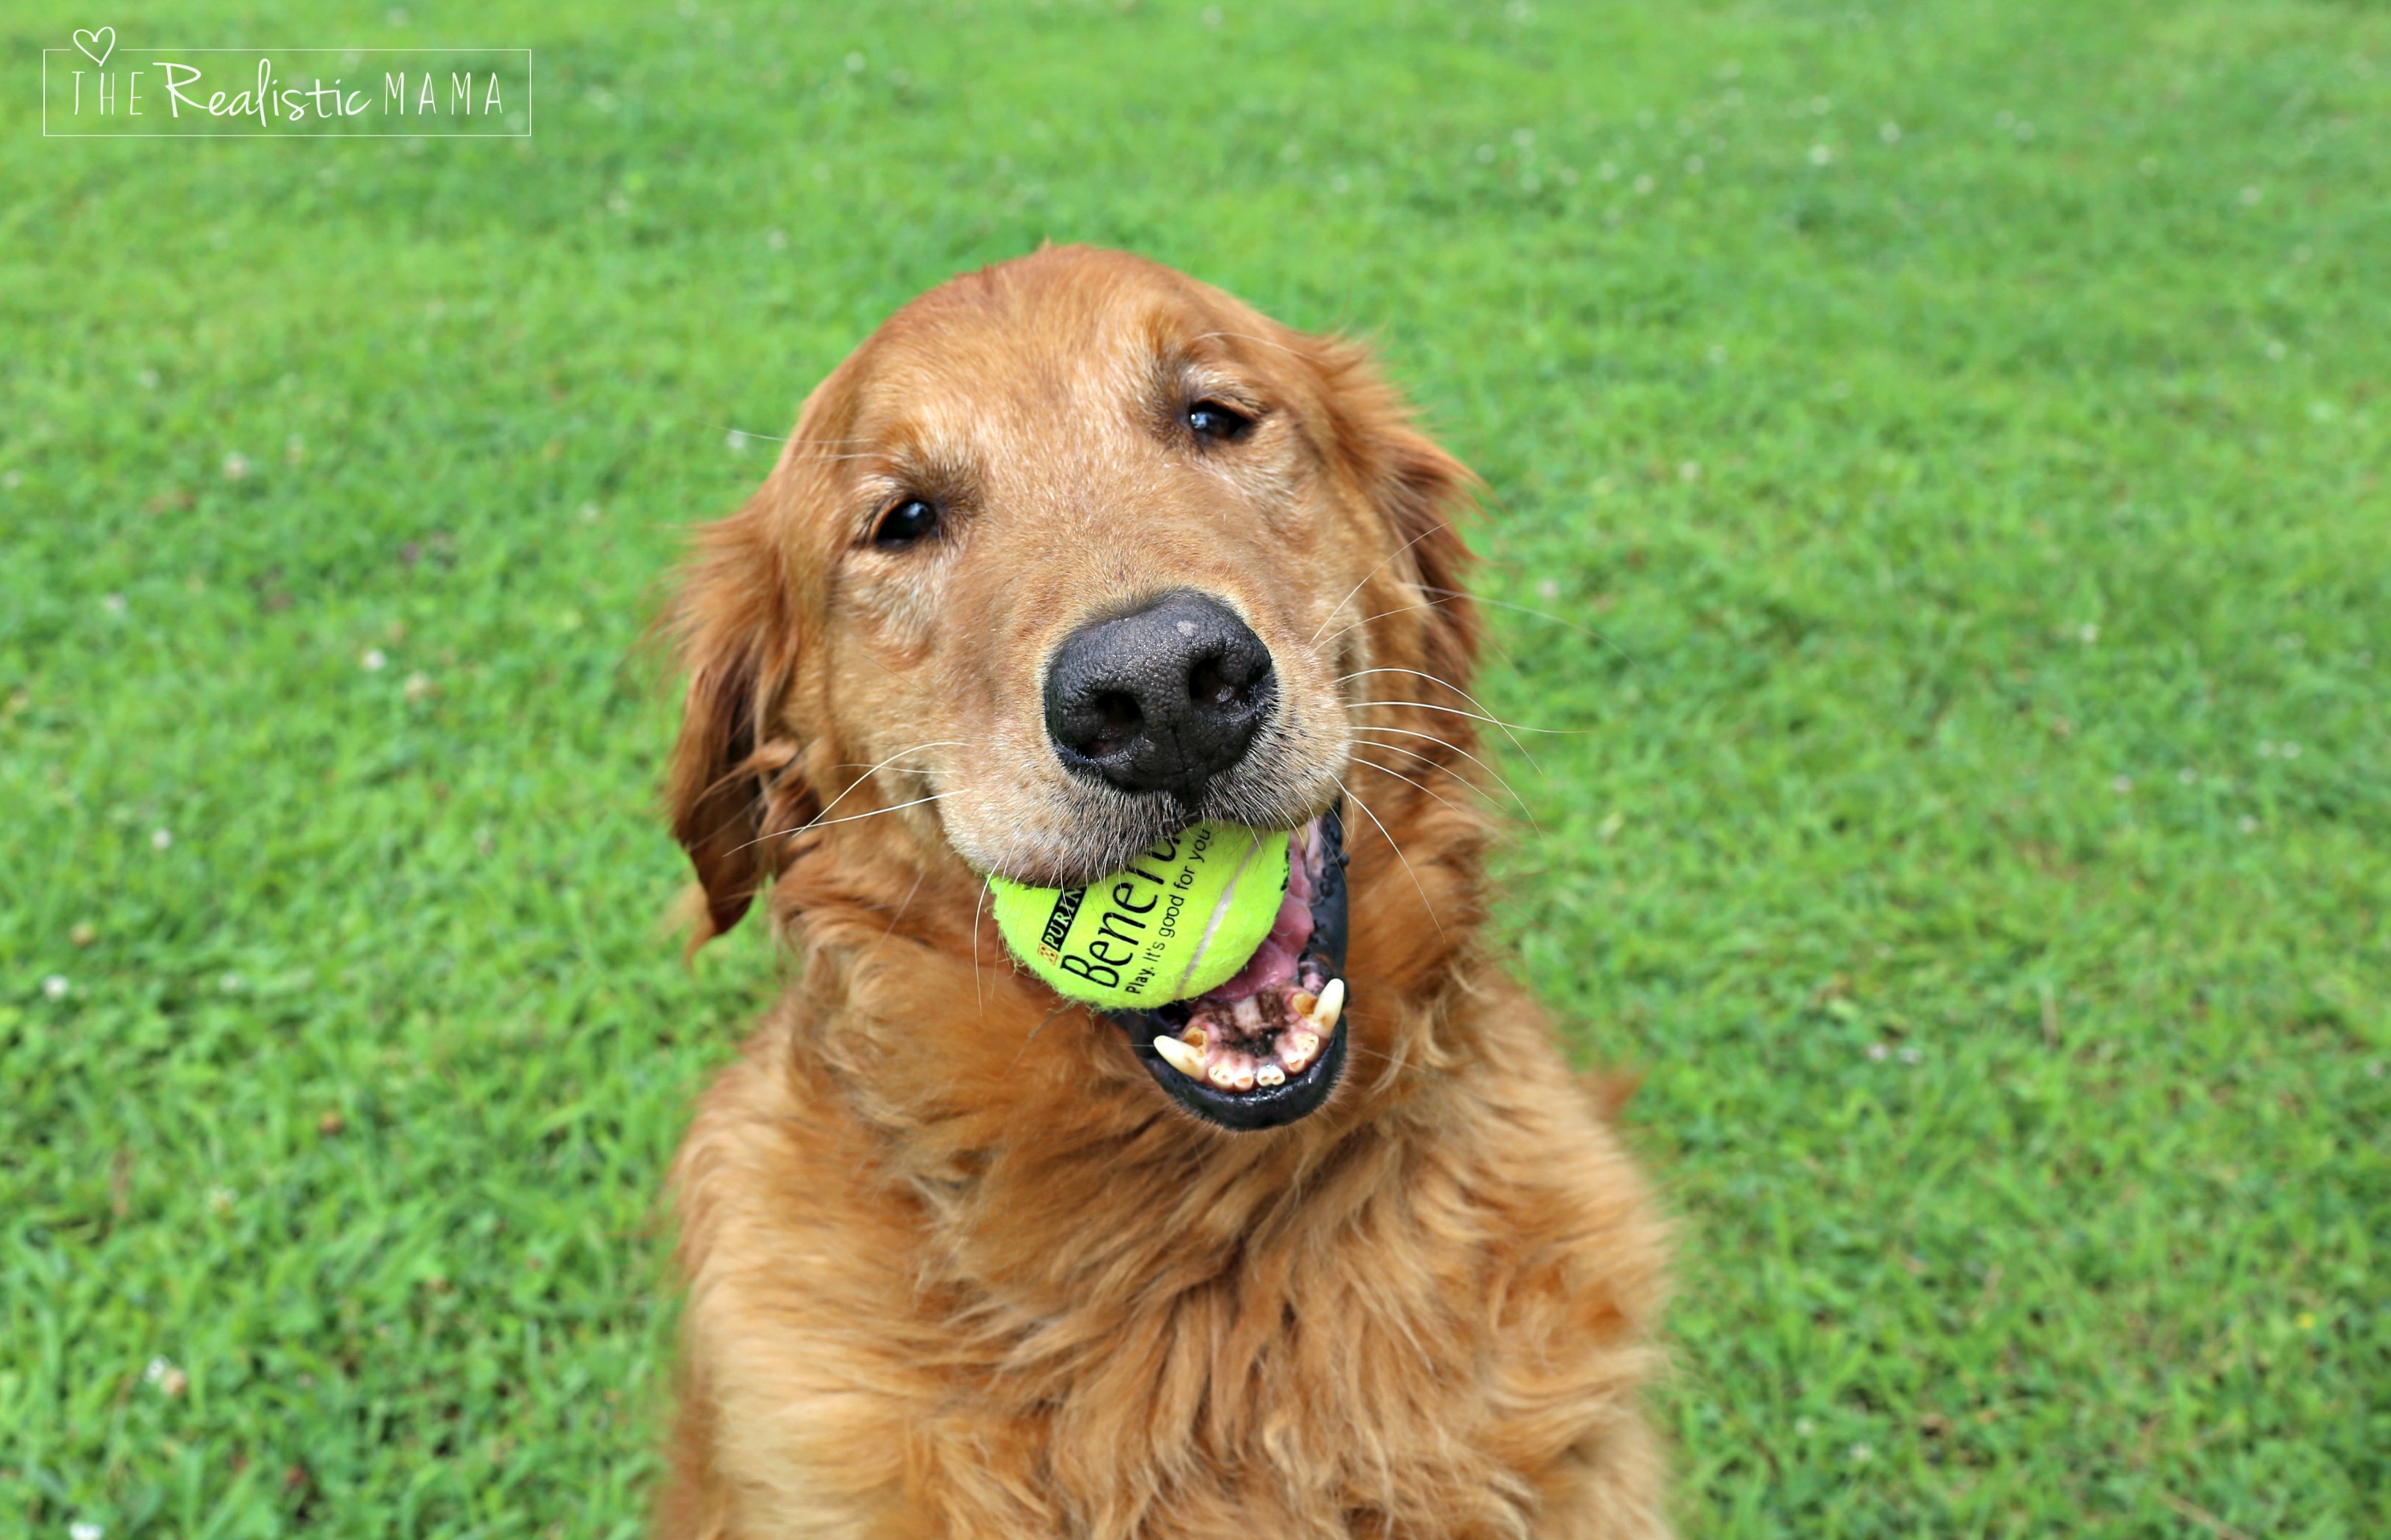 Dog with tennis ball